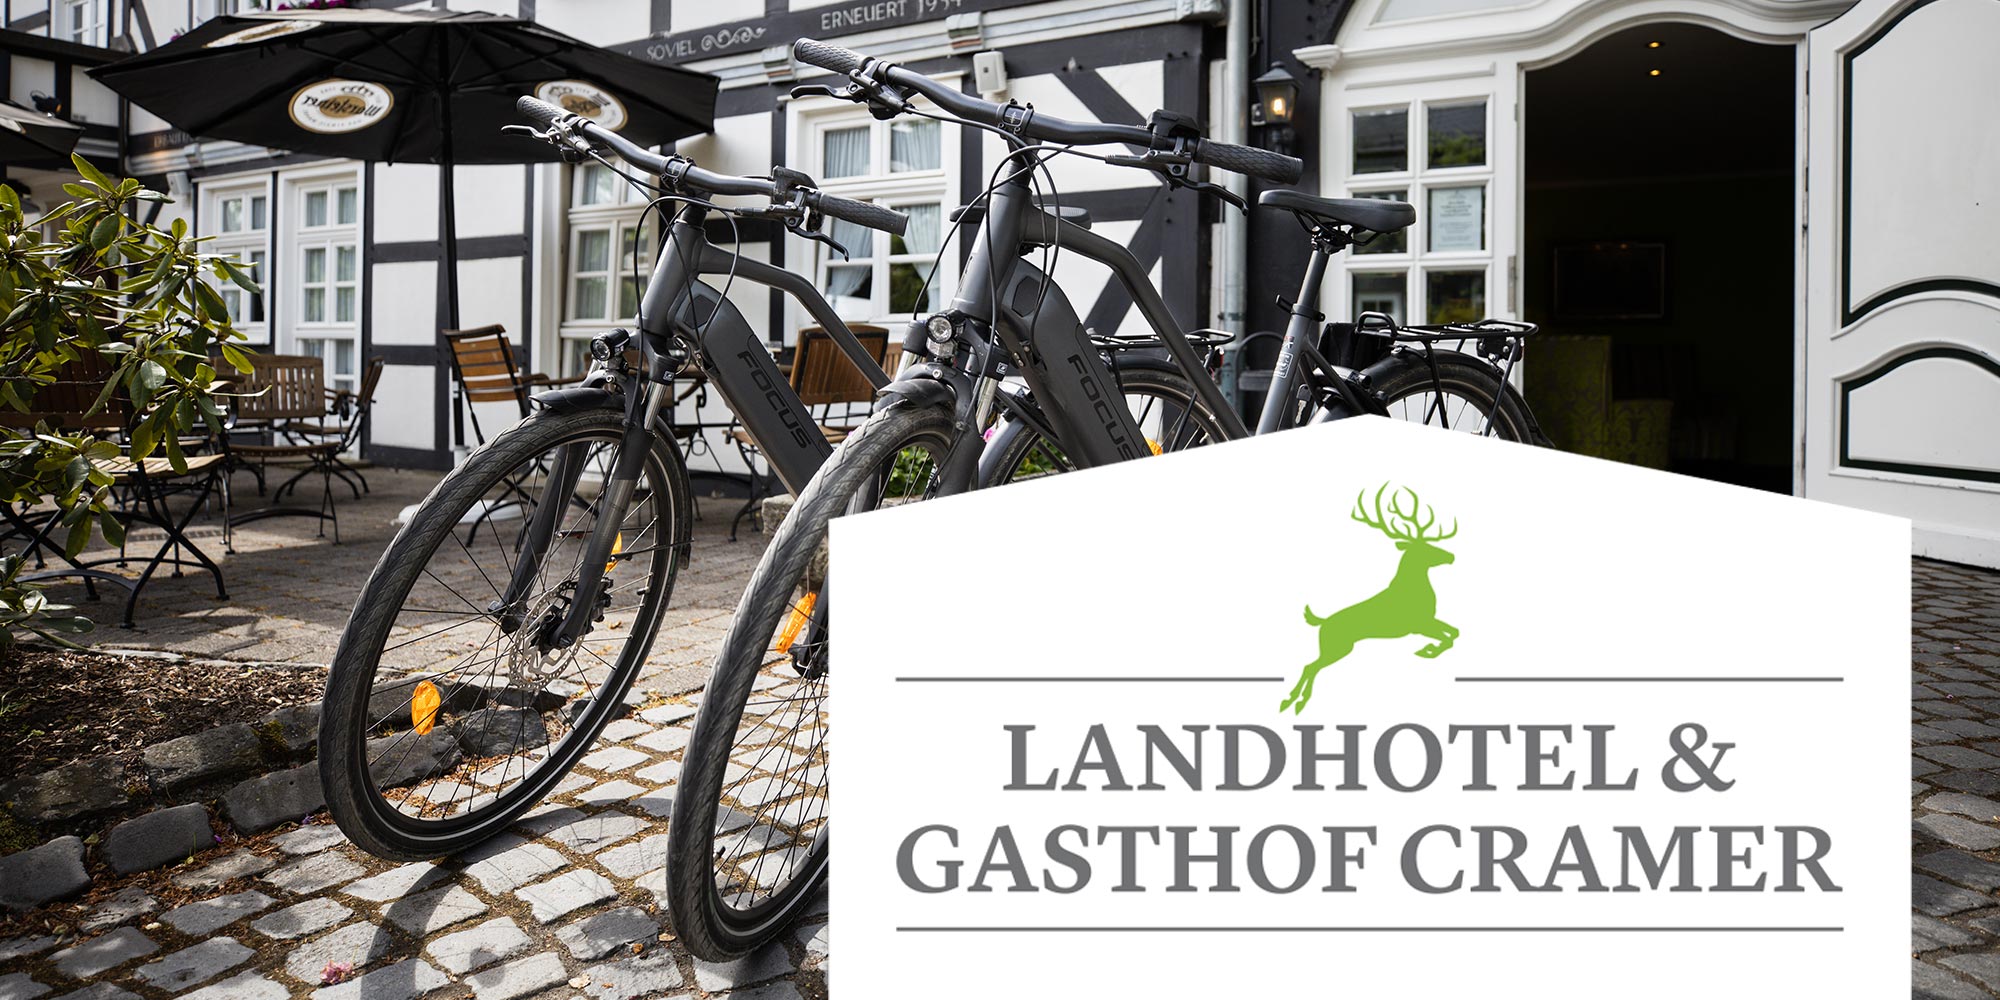 Landhotel Gasthof Cramer Leihräder E-Bikes